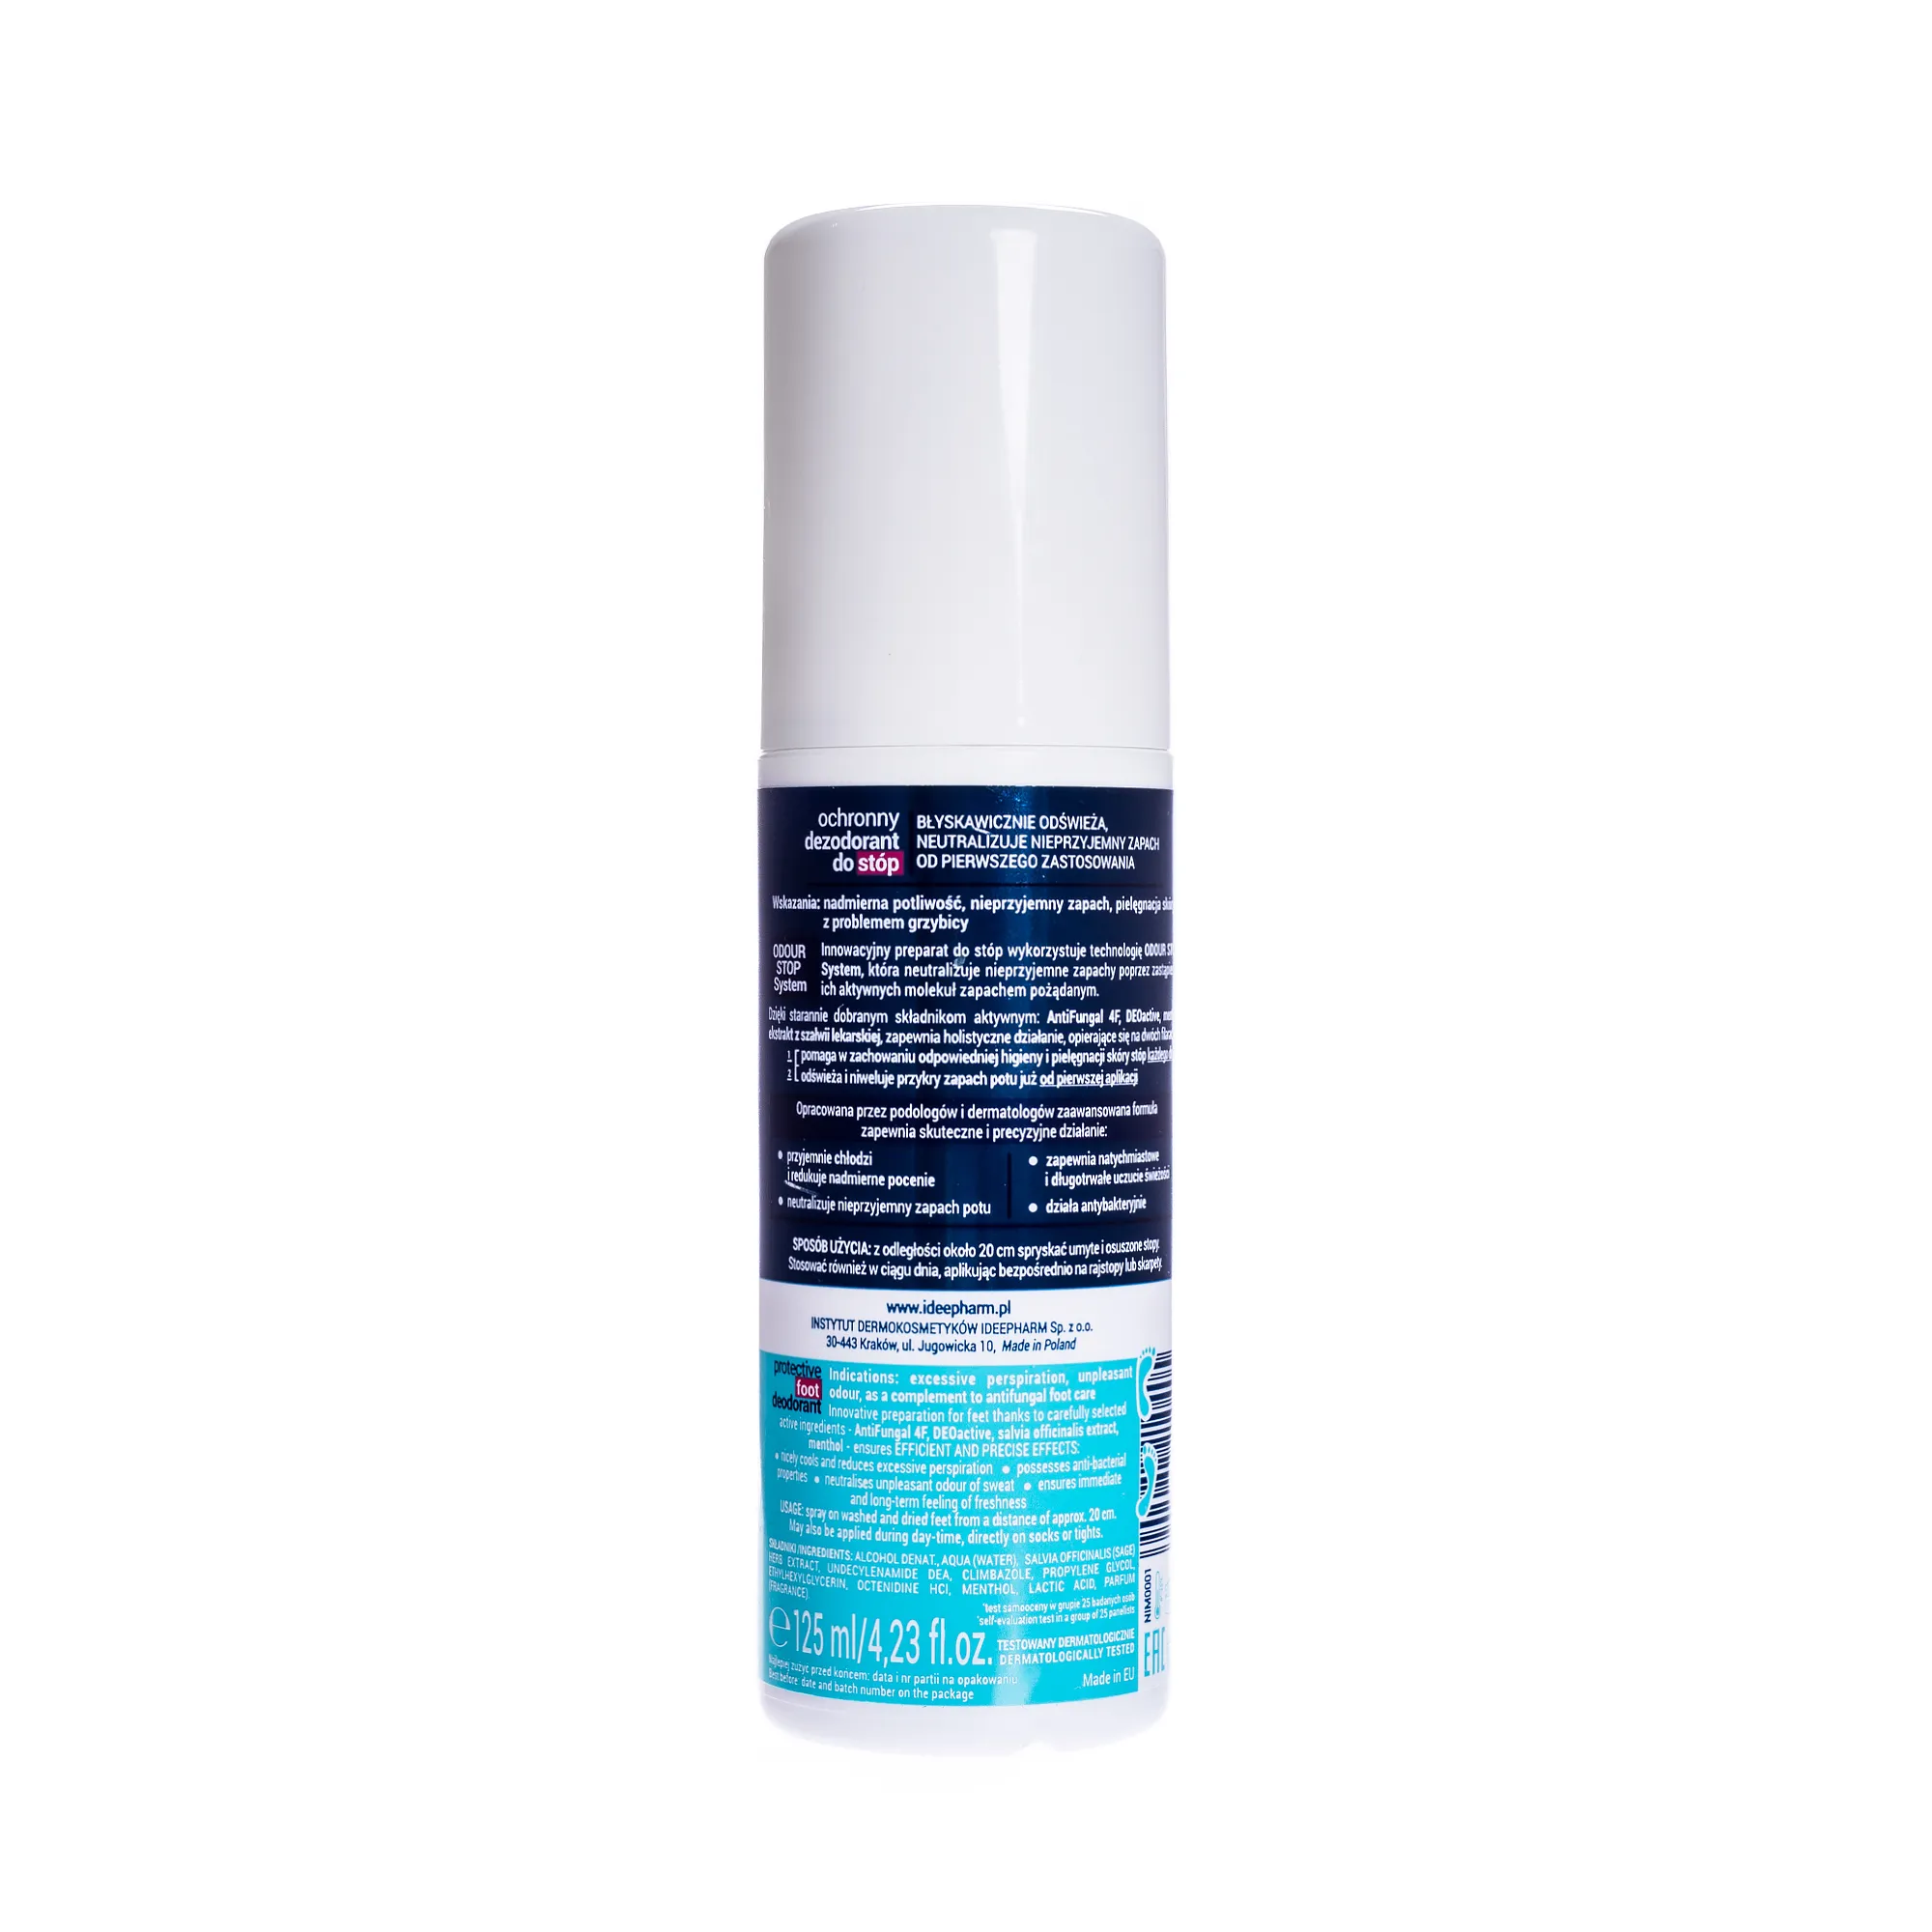 Nivelazione skin therapy Expert Ochronny dezodorant do stóp , 125 ml 